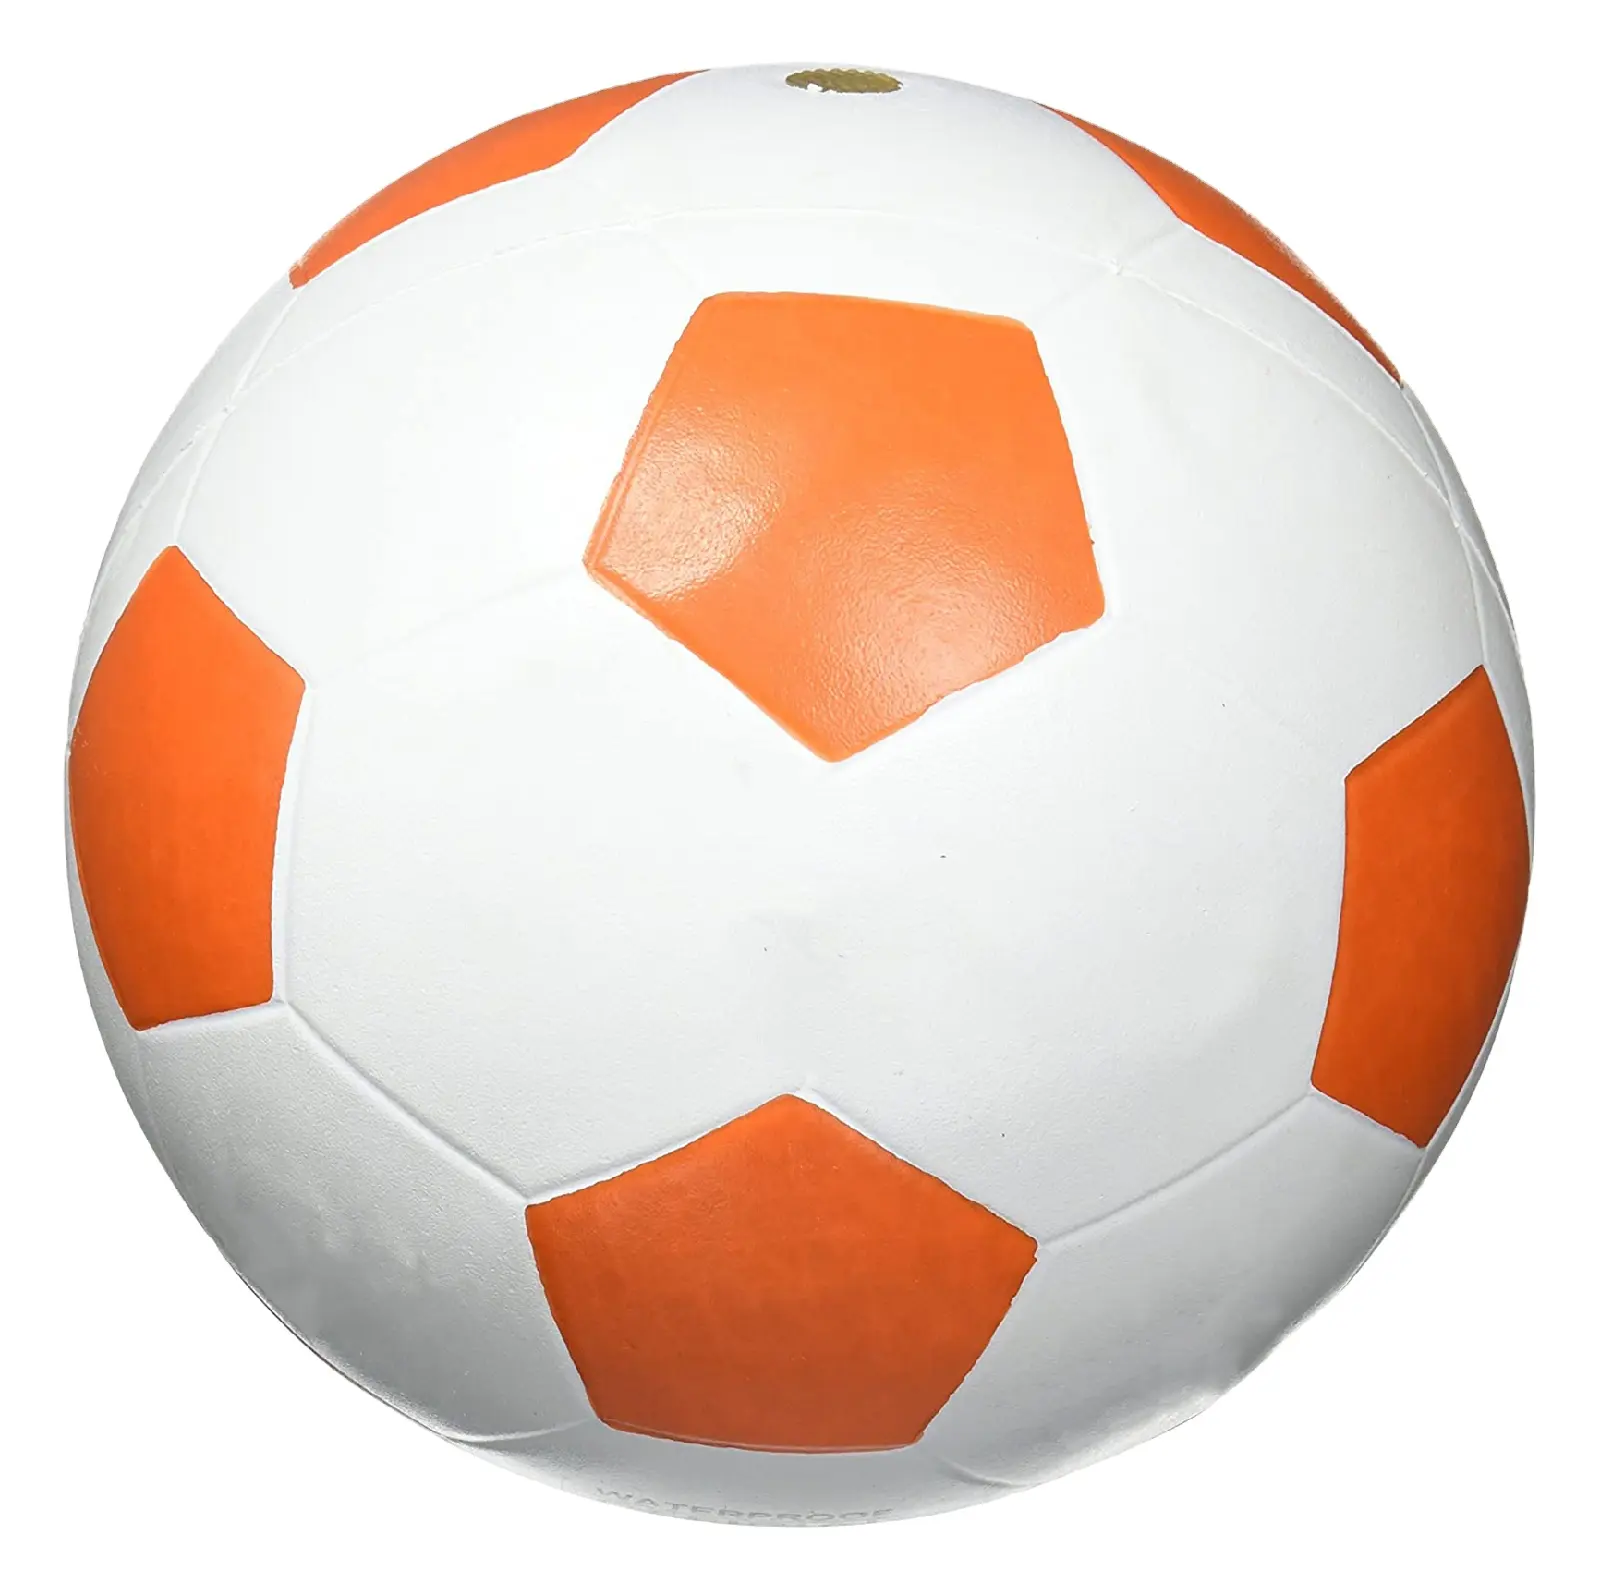 आधिकारिक फुटबॉल बॉल पु फुटबॉल बॉल आकार 5 टीम मैच स्लिप-प्रतिरोधी सहज फुटबॉल प्रशिक्षण चमकदार सतह खेल उपकरण